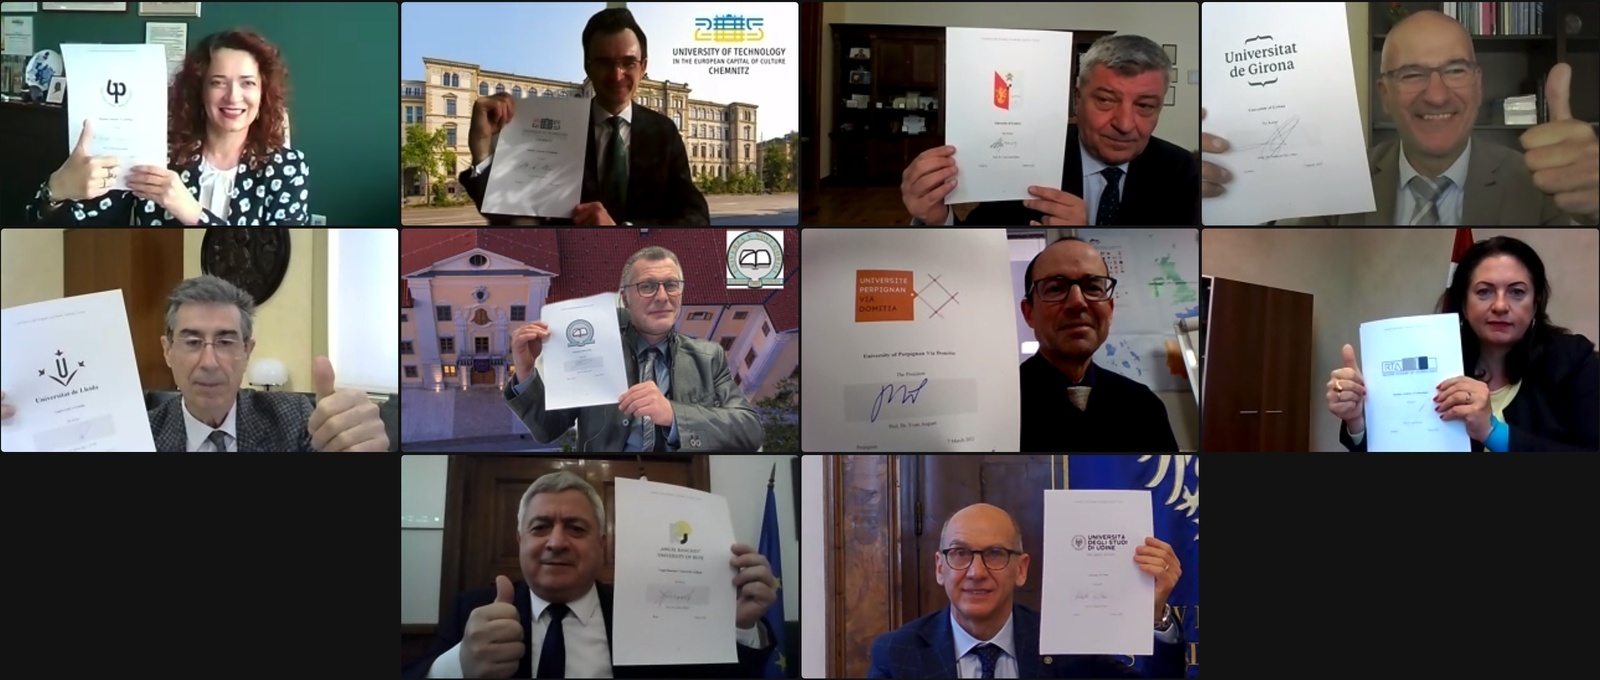 University of Nova Gorica among signees of European University Convention